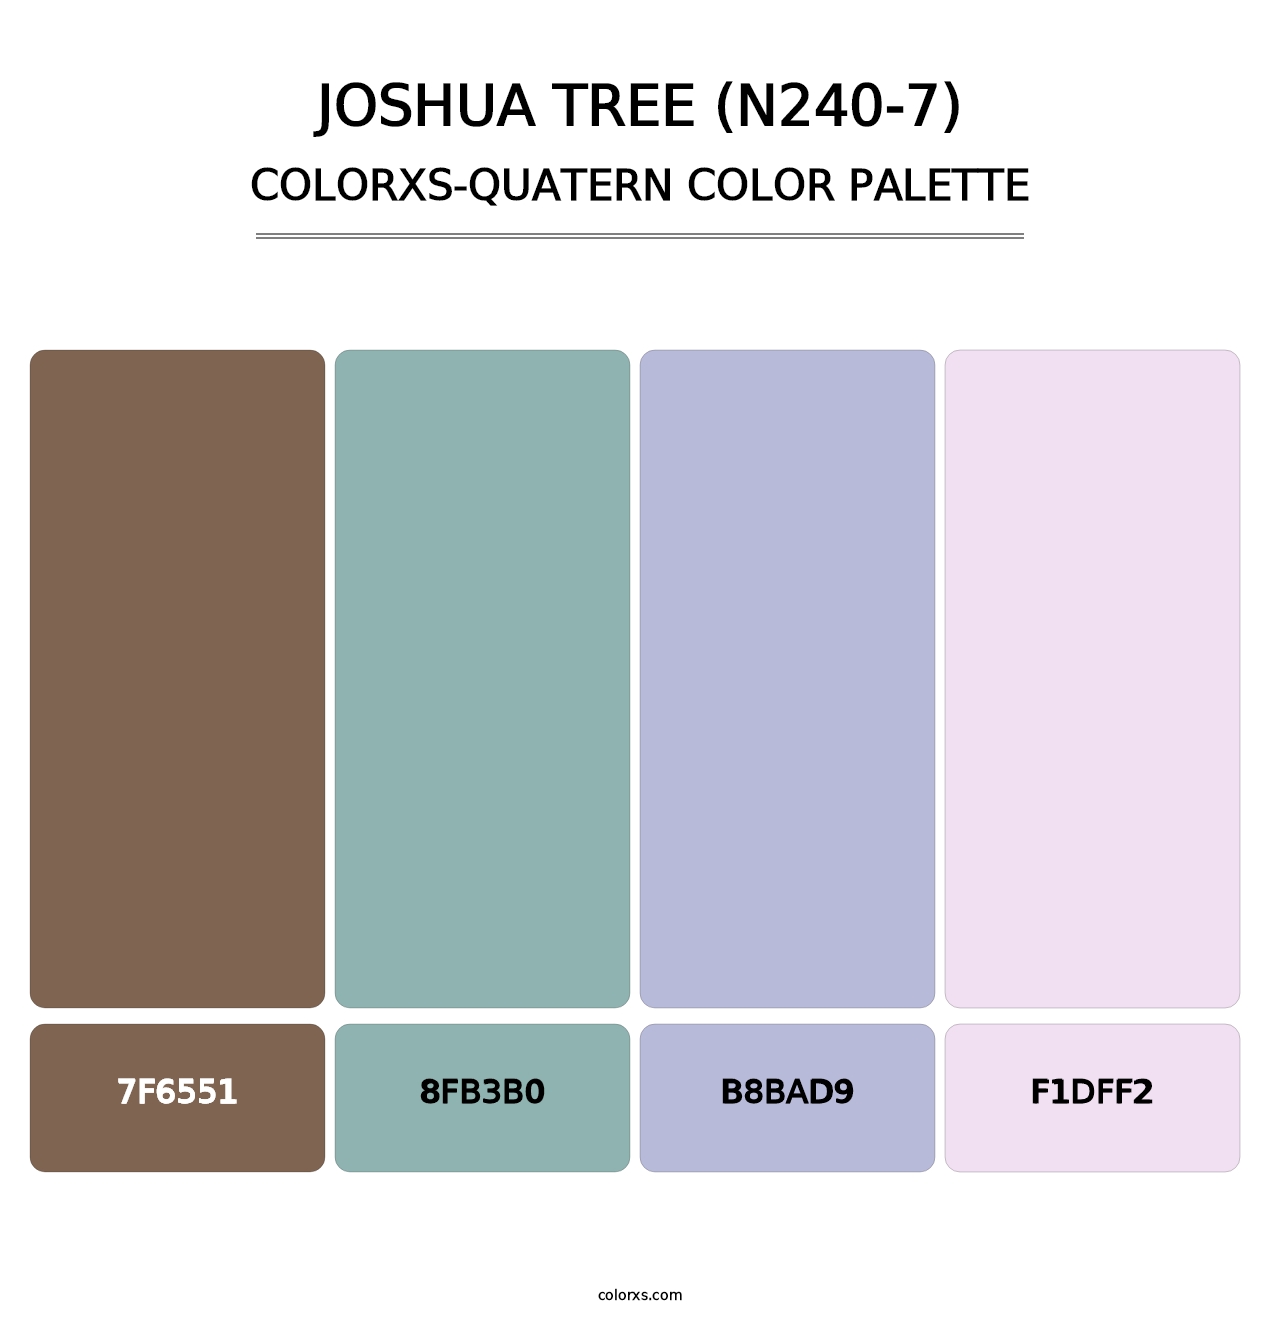 Joshua Tree (N240-7) - Colorxs Quatern Palette